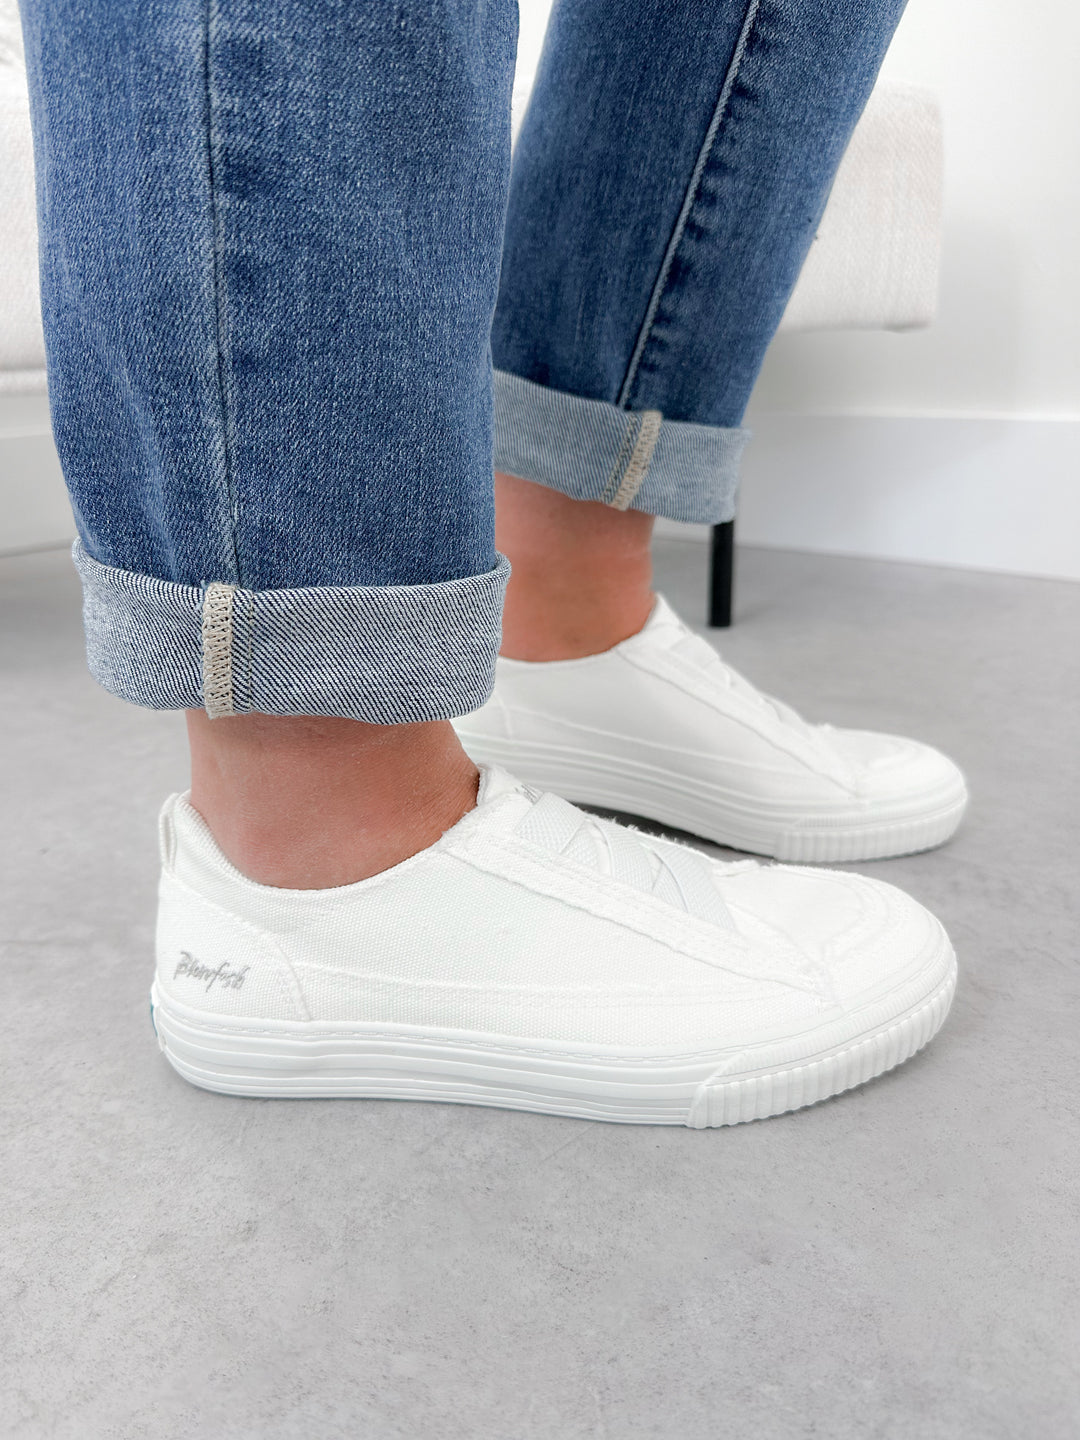 Aztek Sneakers in Washed White